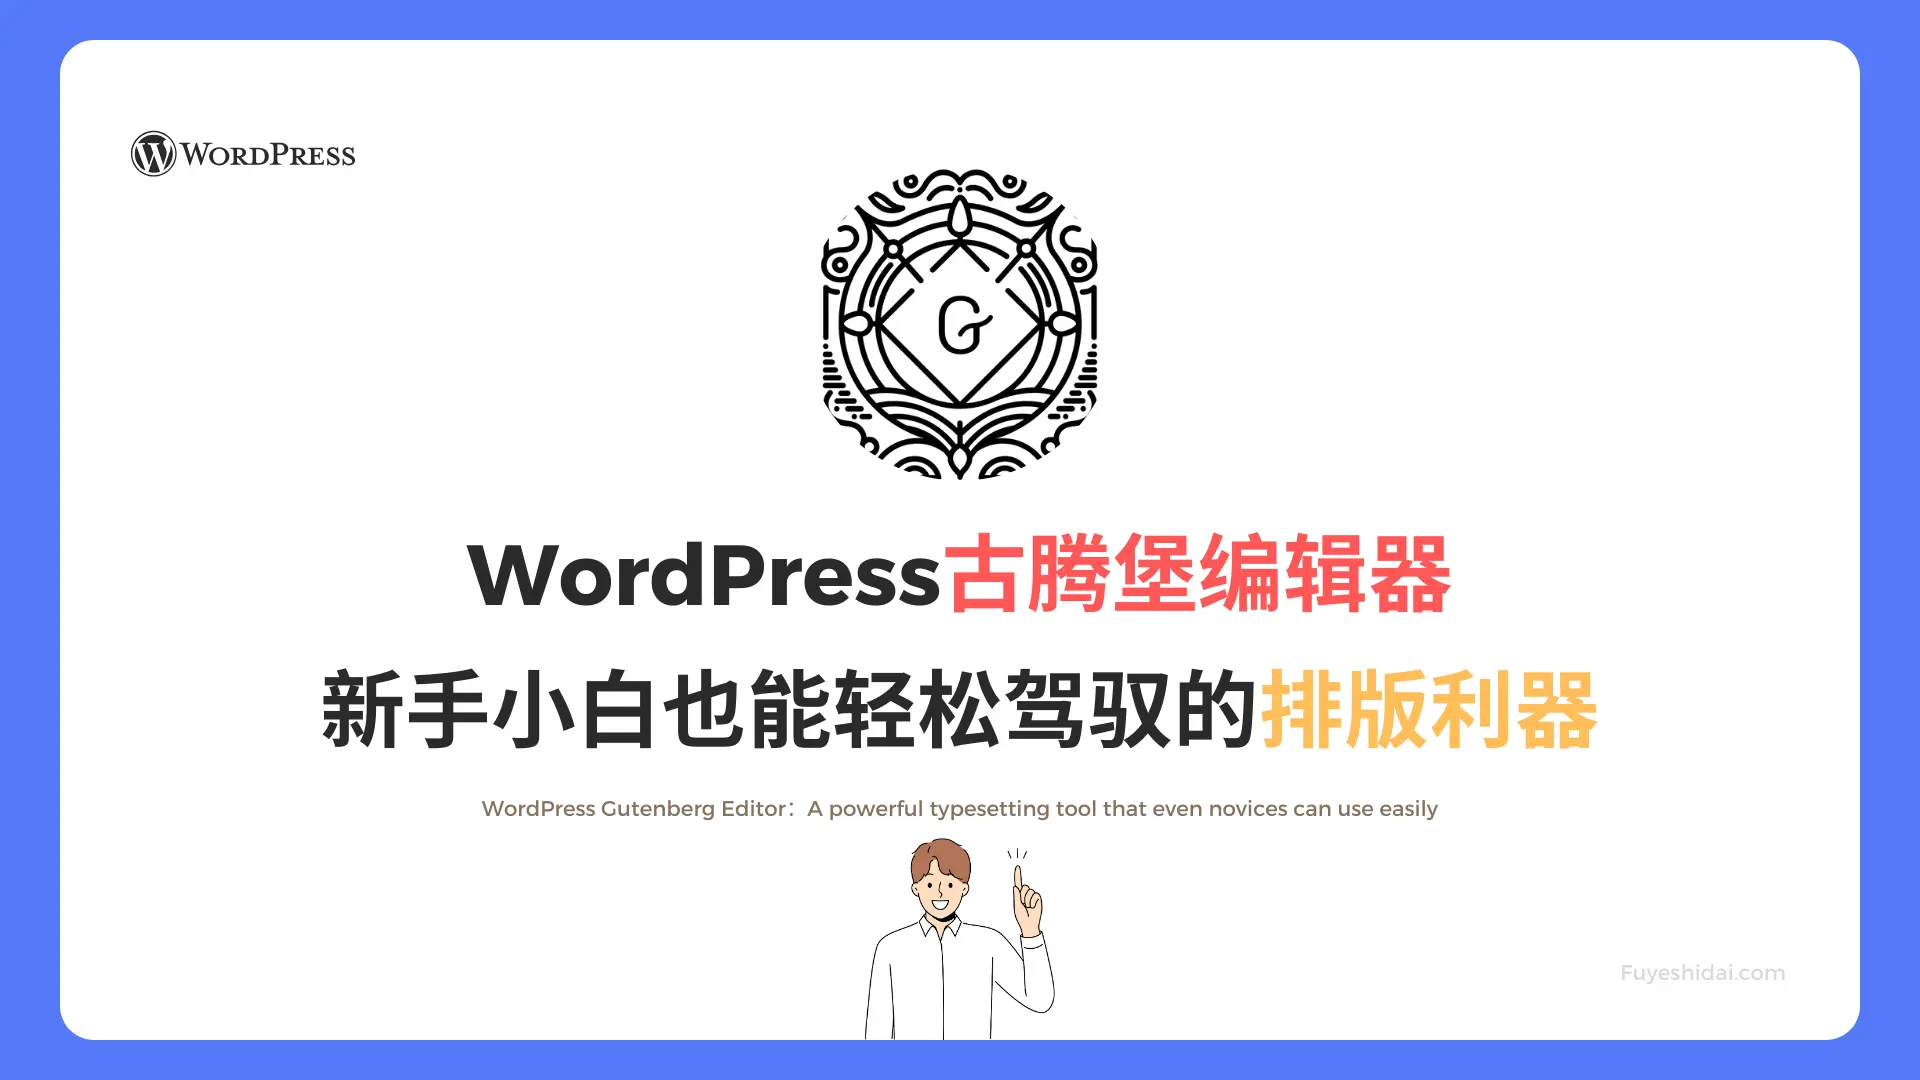 Wordpress插件与设计 - WP教程 4 - WordPress古腾堡编辑器！新手也能轻松驾驭的排版神器 - 特色图片